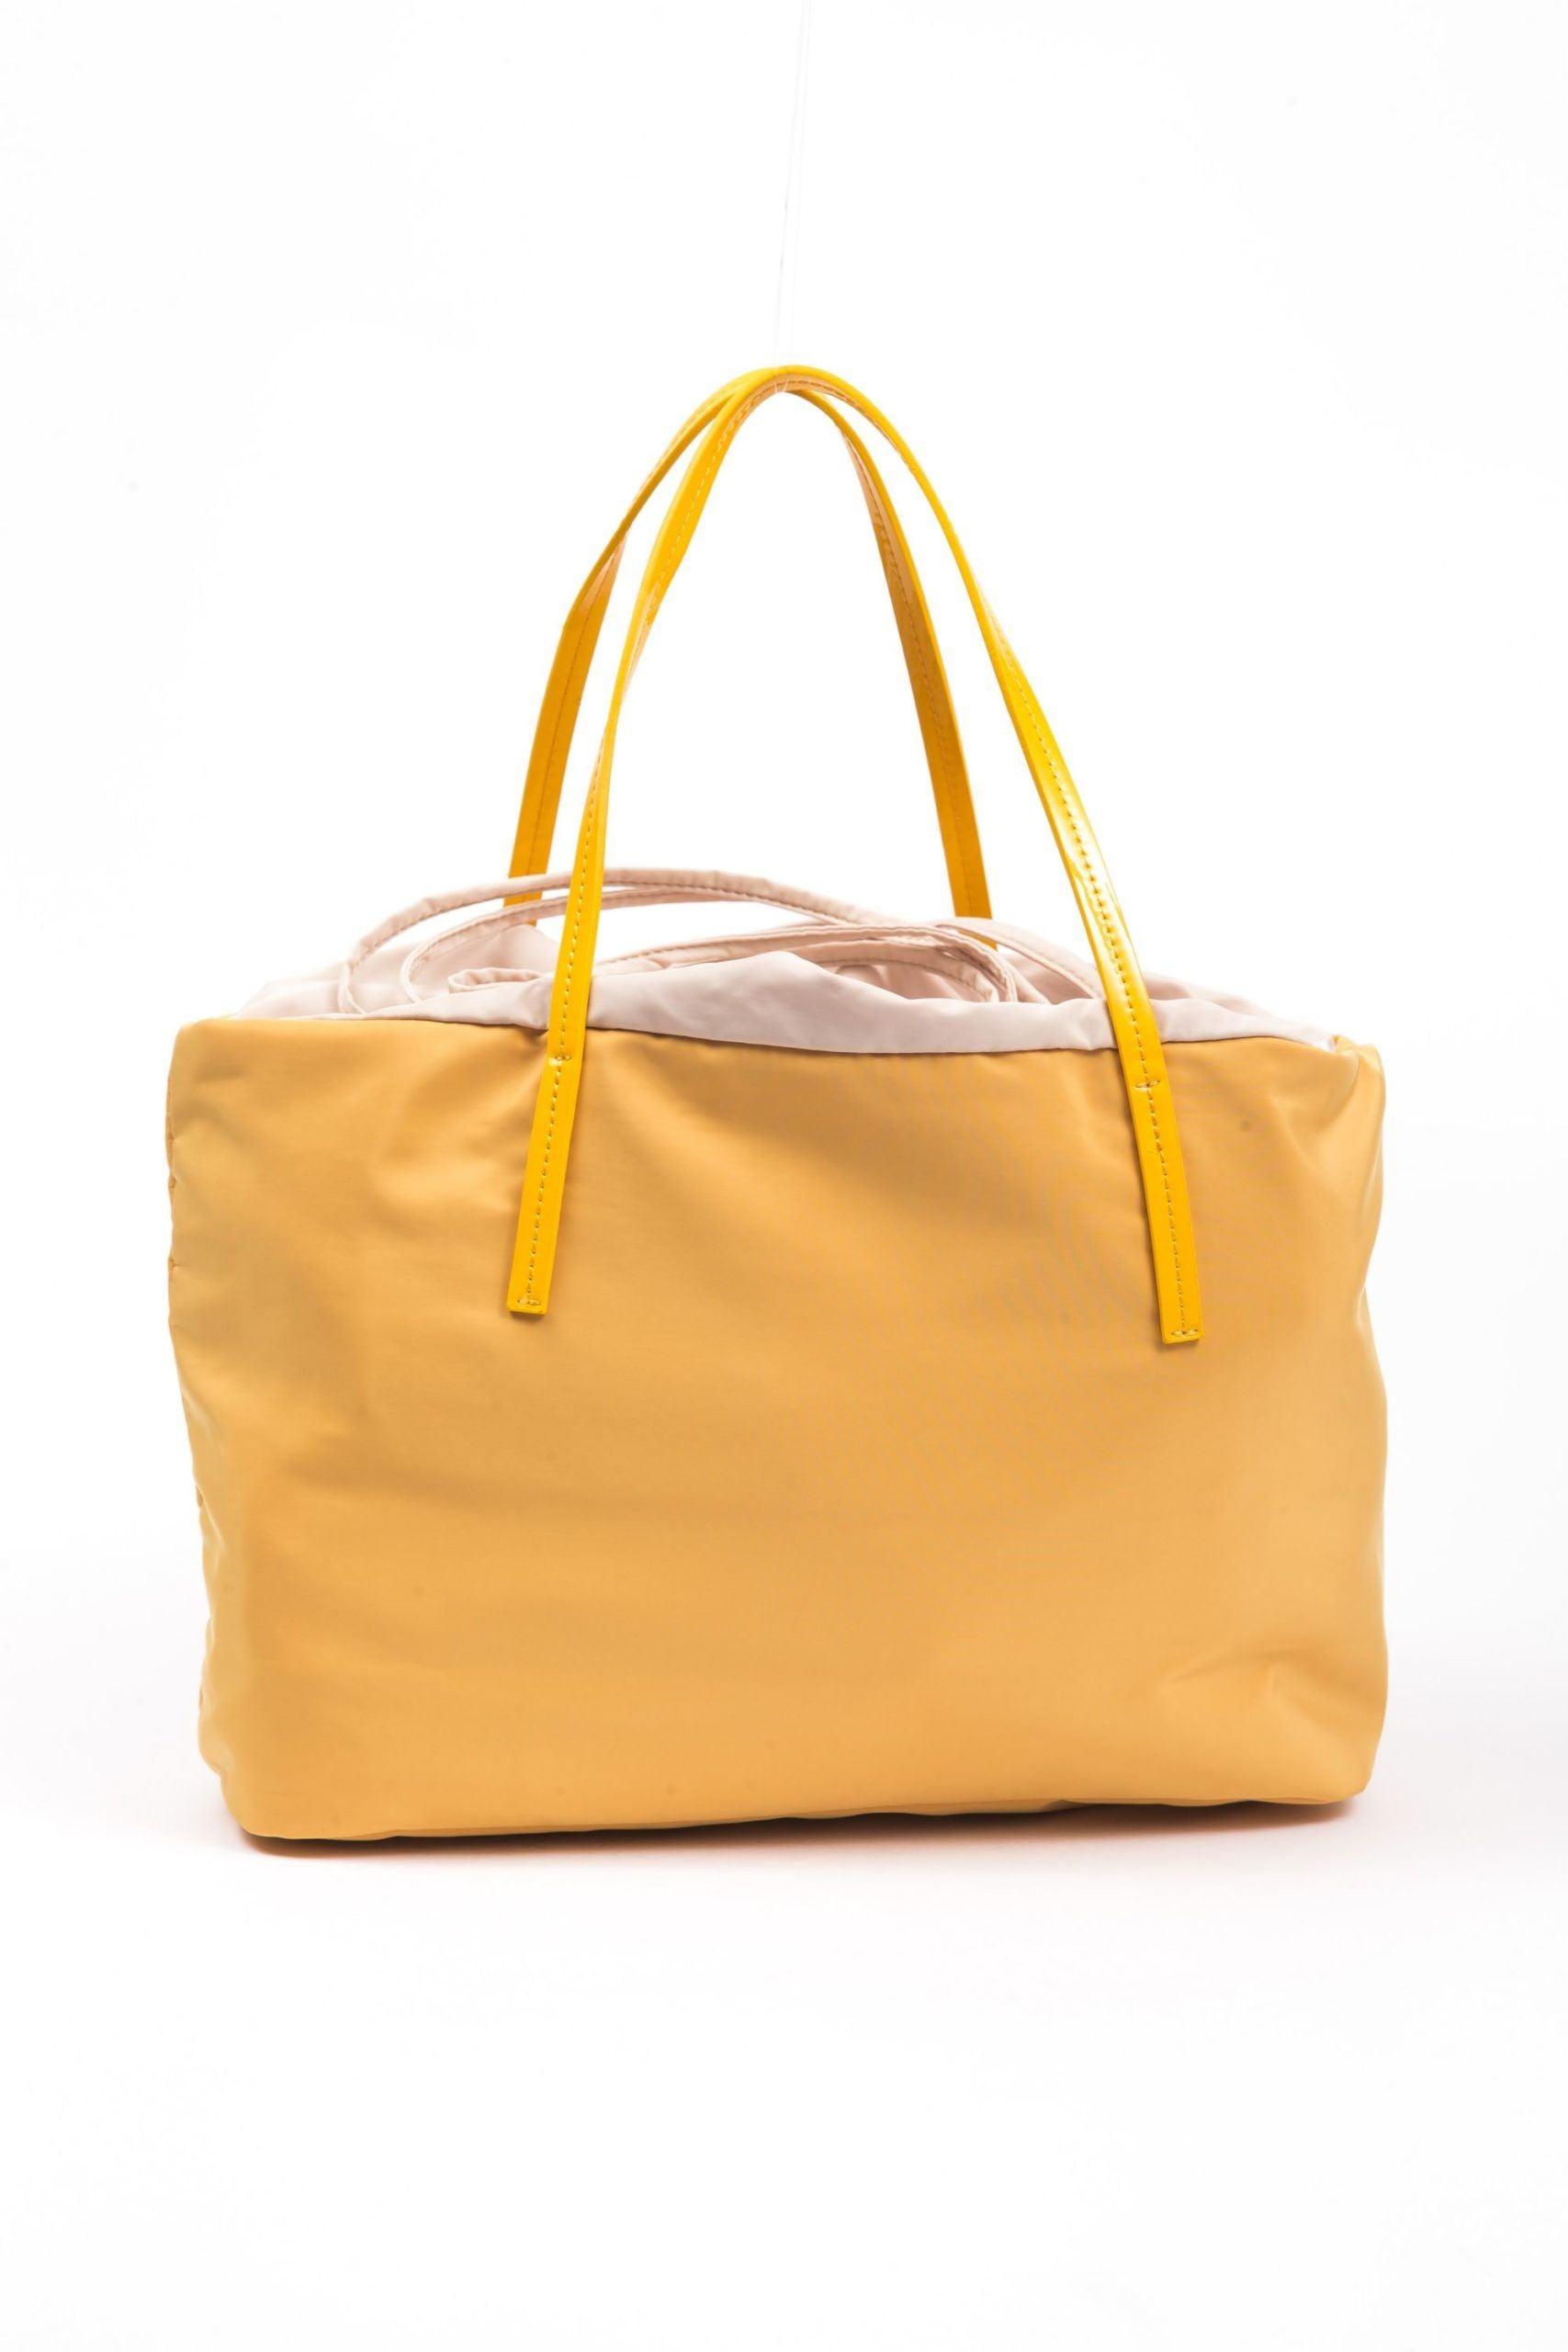 BYBLOS Sunshine Chic Fabric Shopper Bag - PER.FASHION